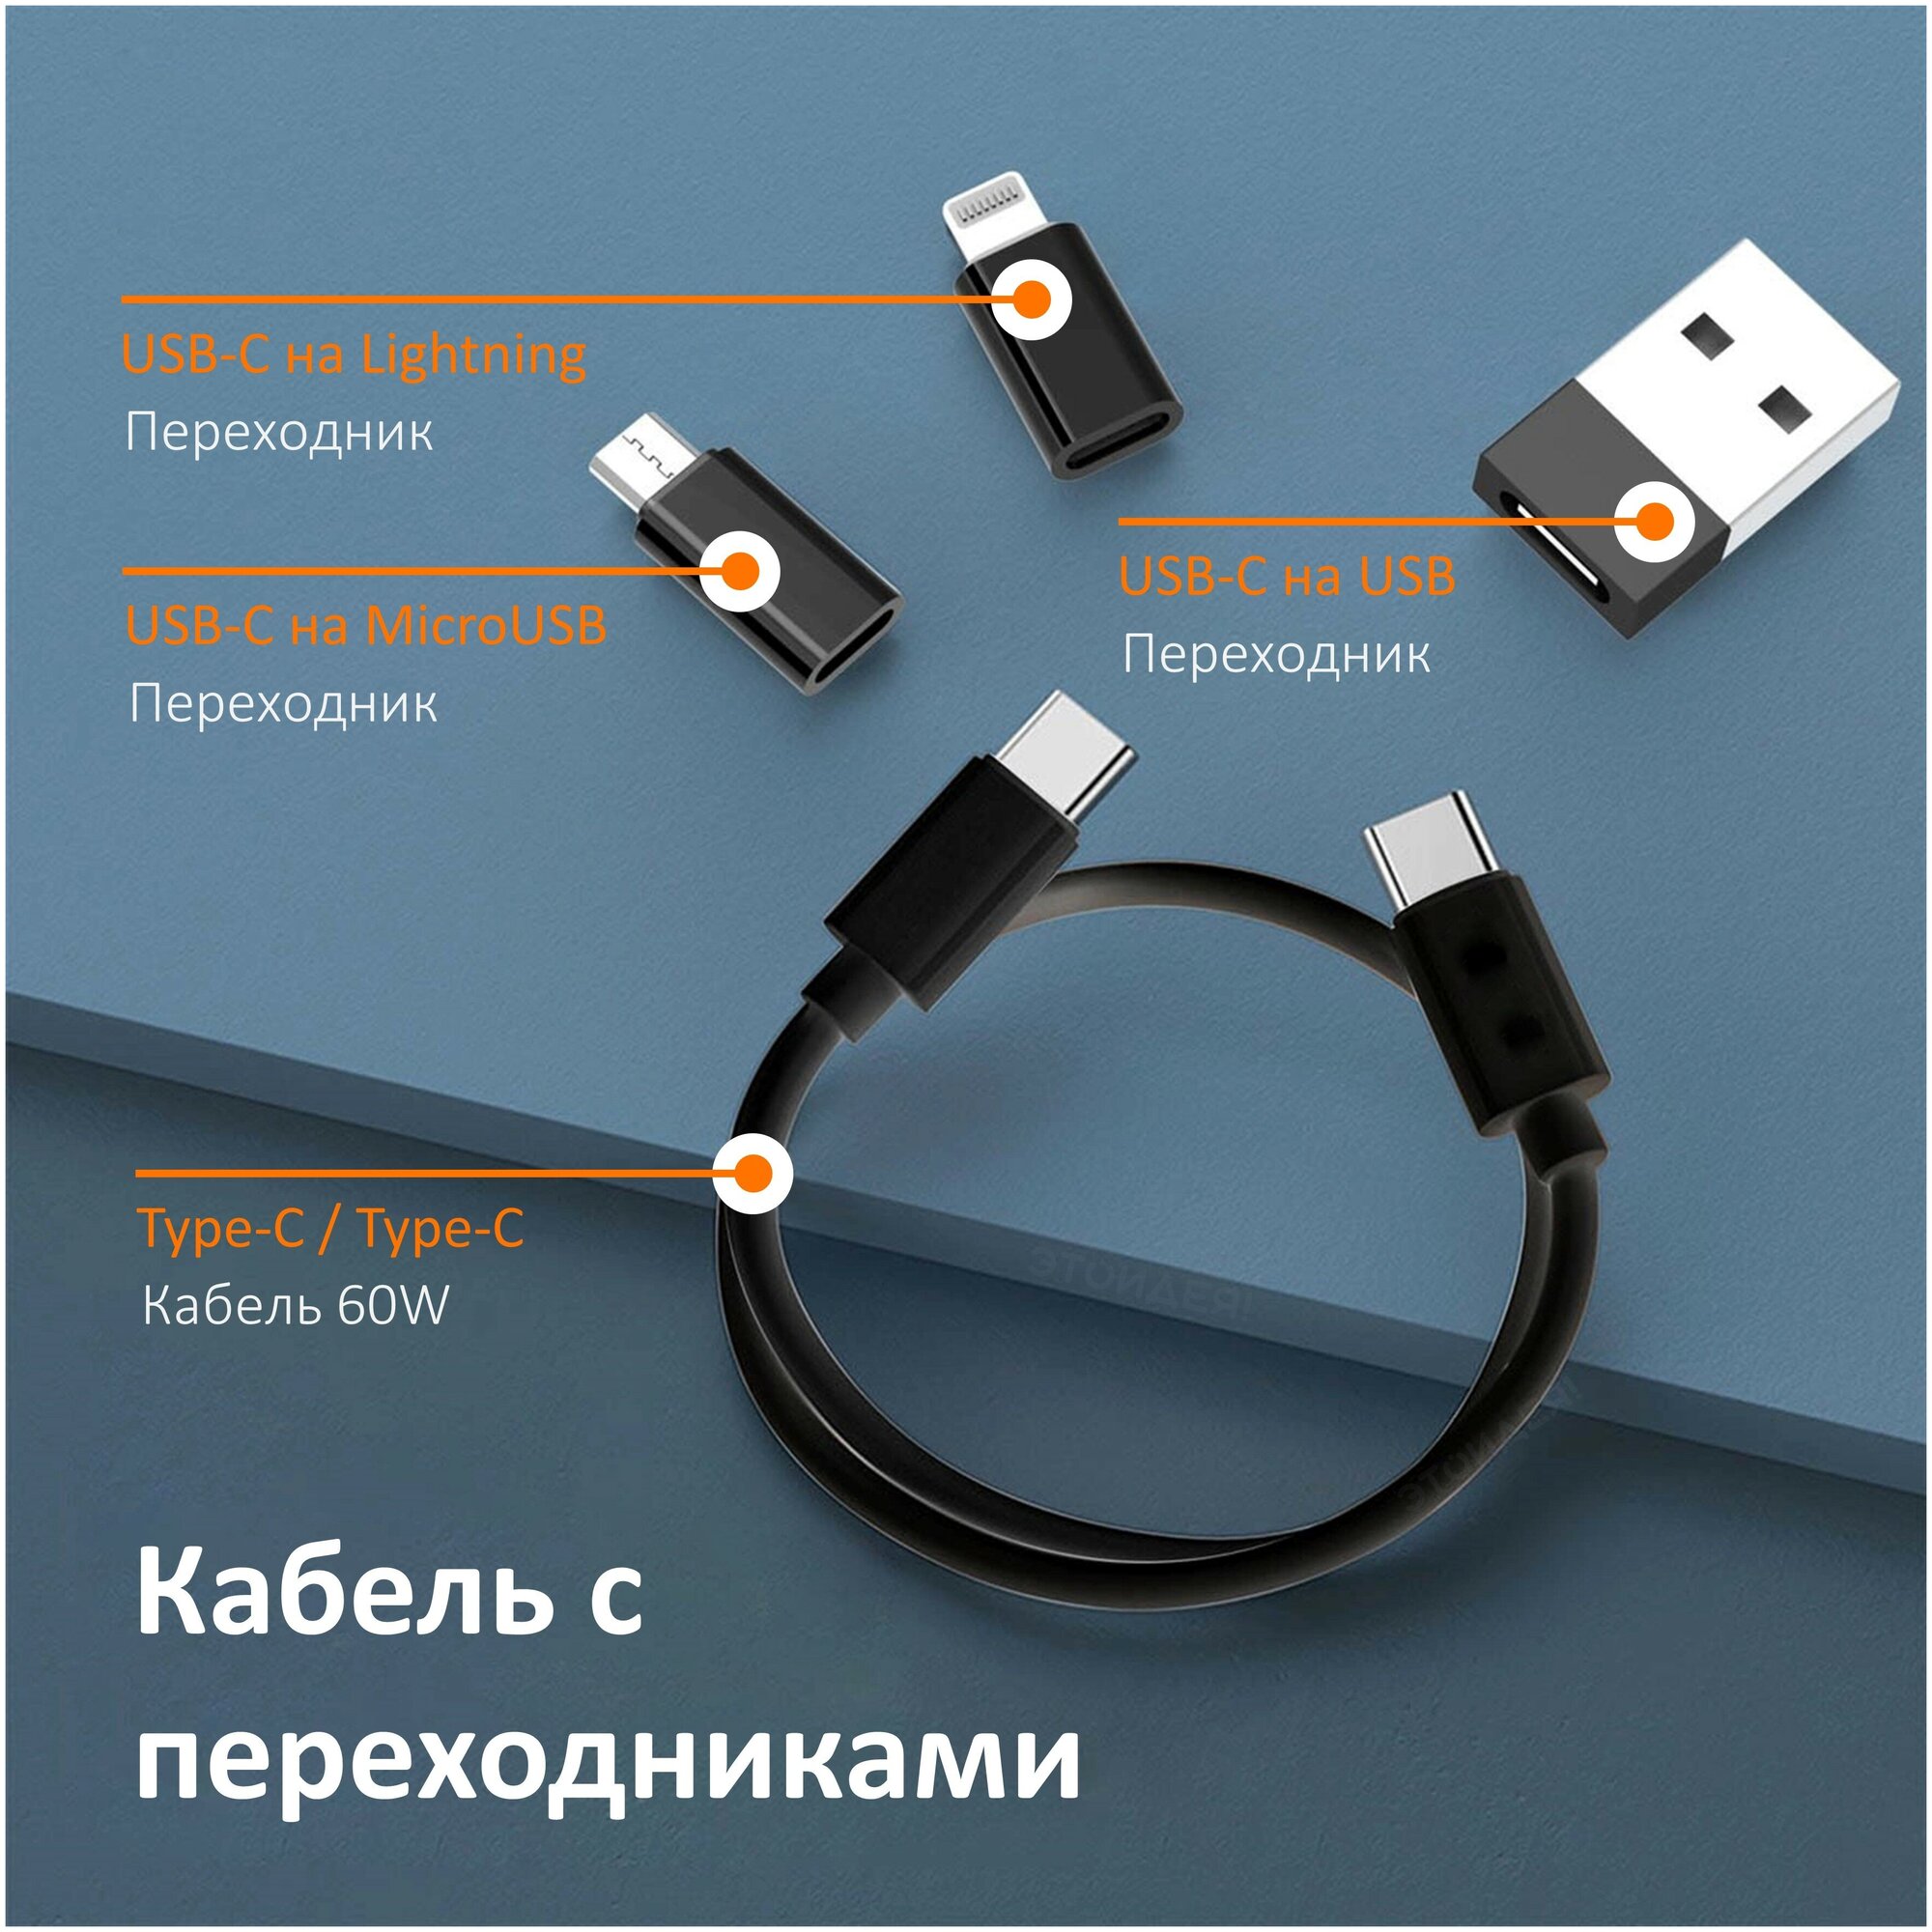 Зарядный набор 5 в 1: футляр - складная подставка для телефона кабель USB-C 60W переходники (Lightning для iPhone USB microUSB) холдер SIM-карт